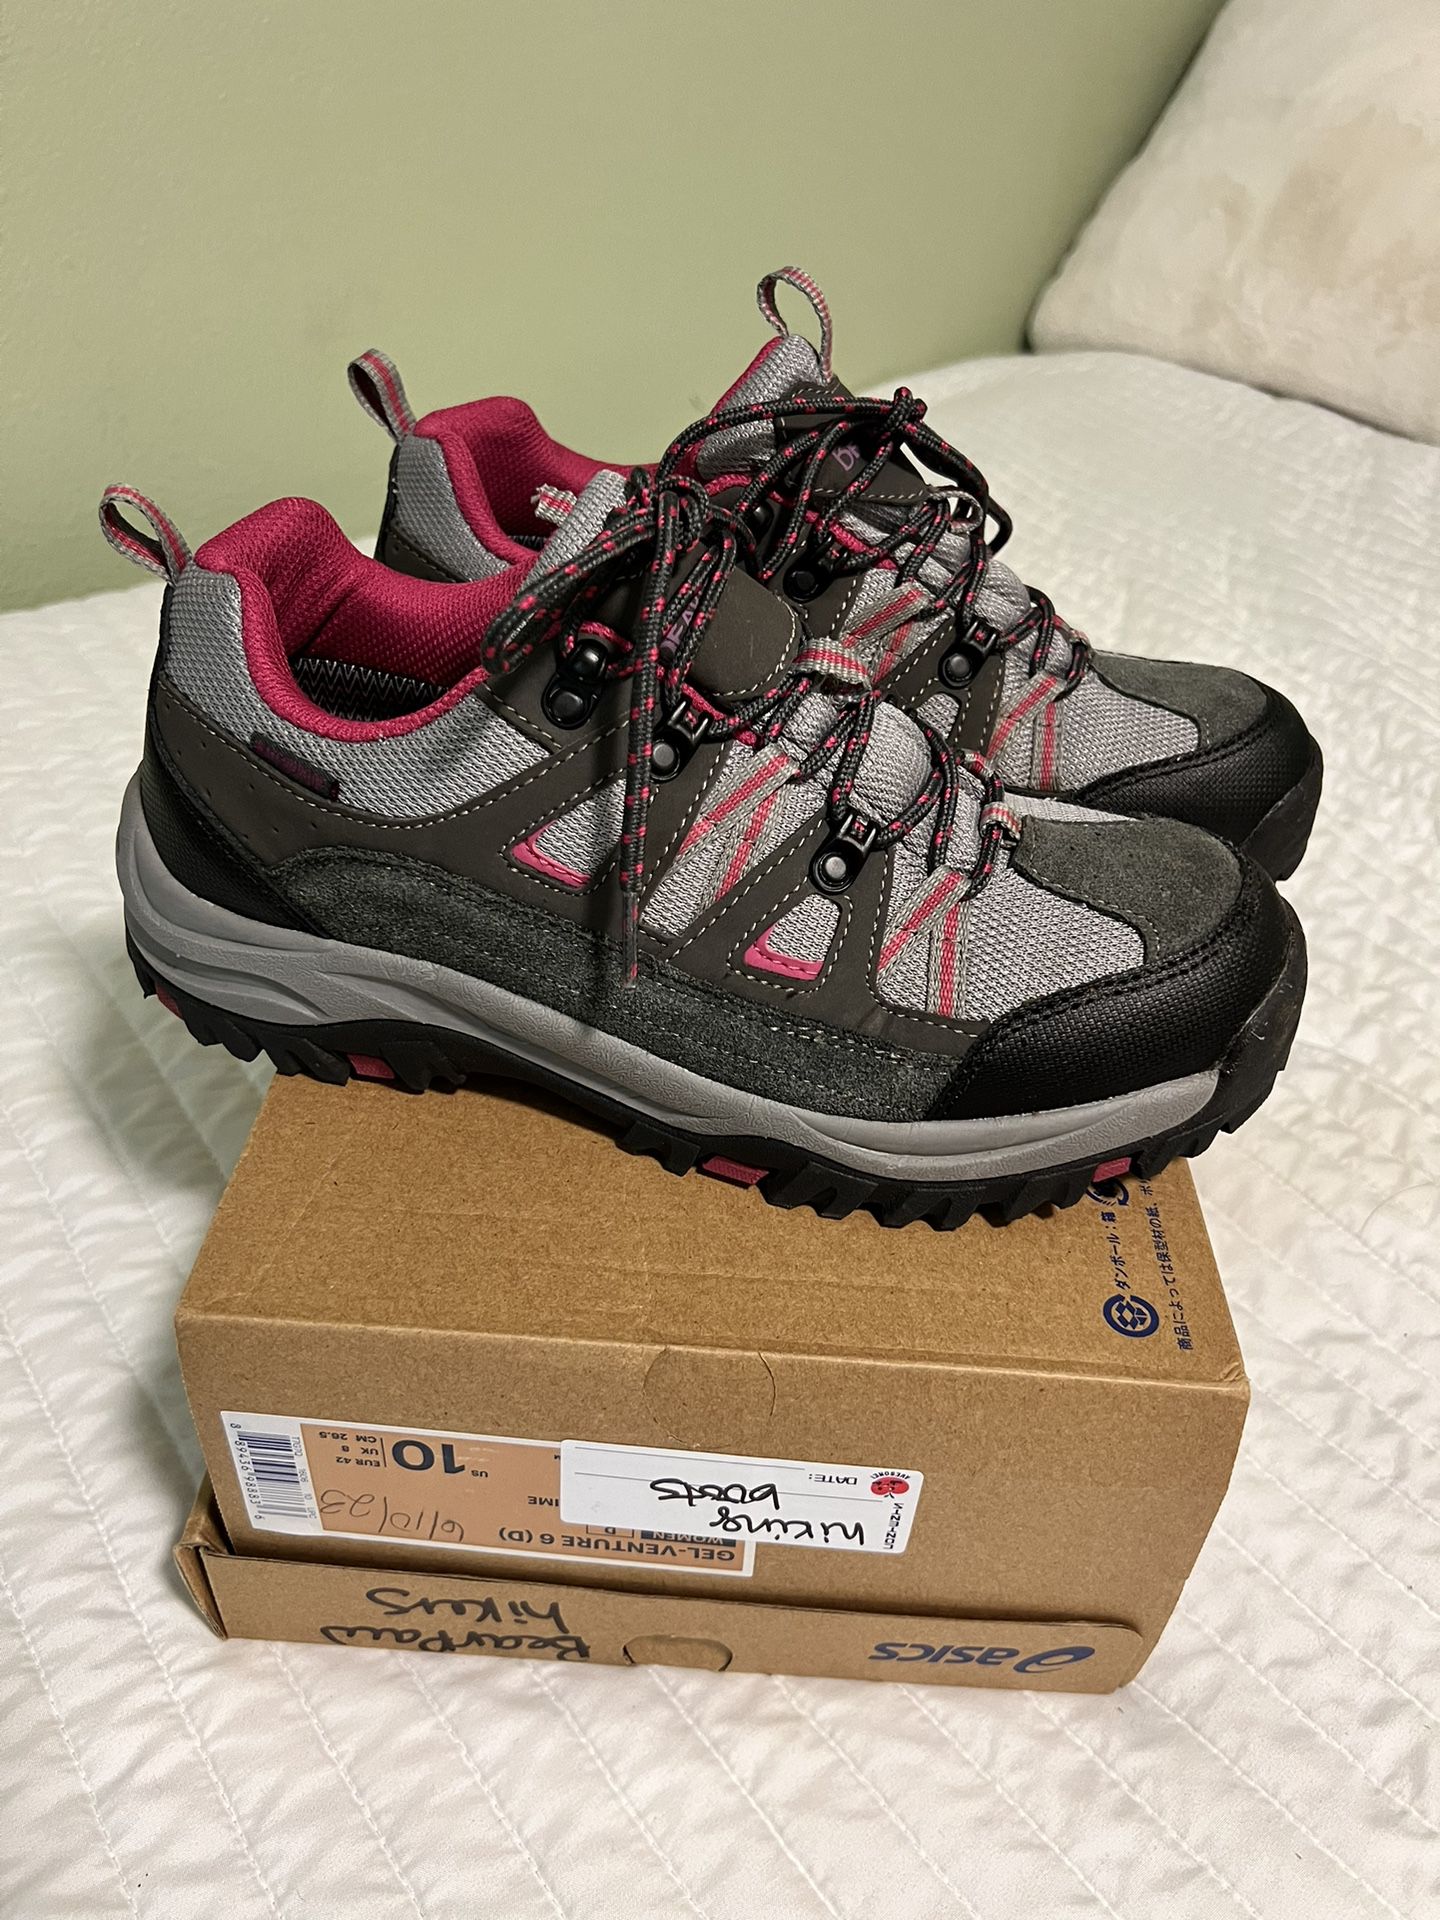 BearPaw Women’s Hiking Boots - Low Cut Size 9